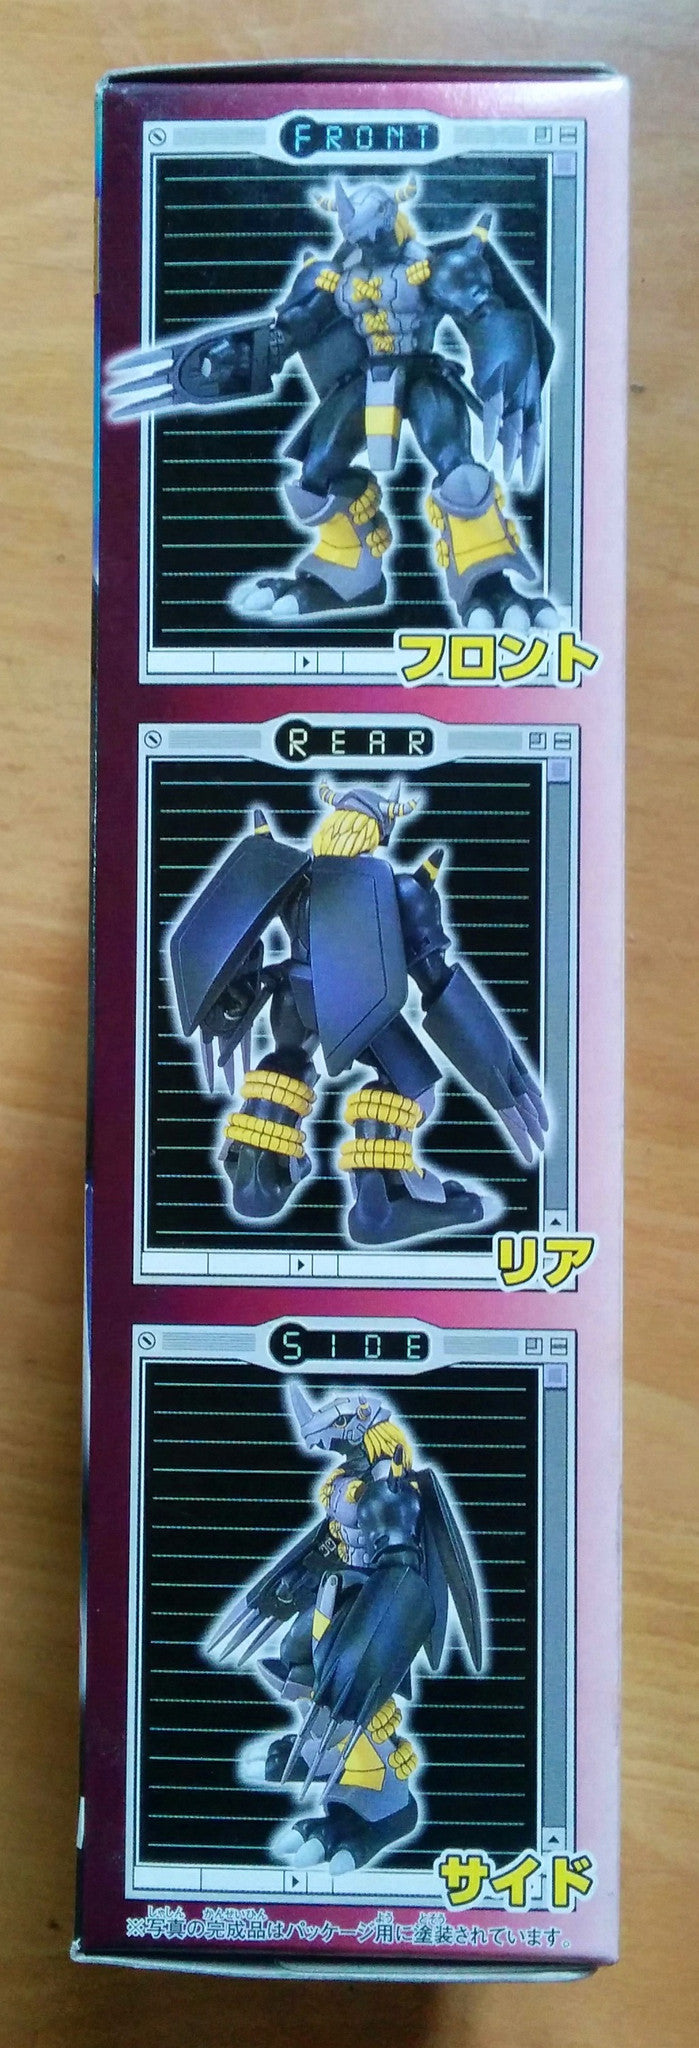 Bandai 2000 Digimon Adventure Black War Greymon Plastic Model Kit Figure - Lavits Figure
 - 3